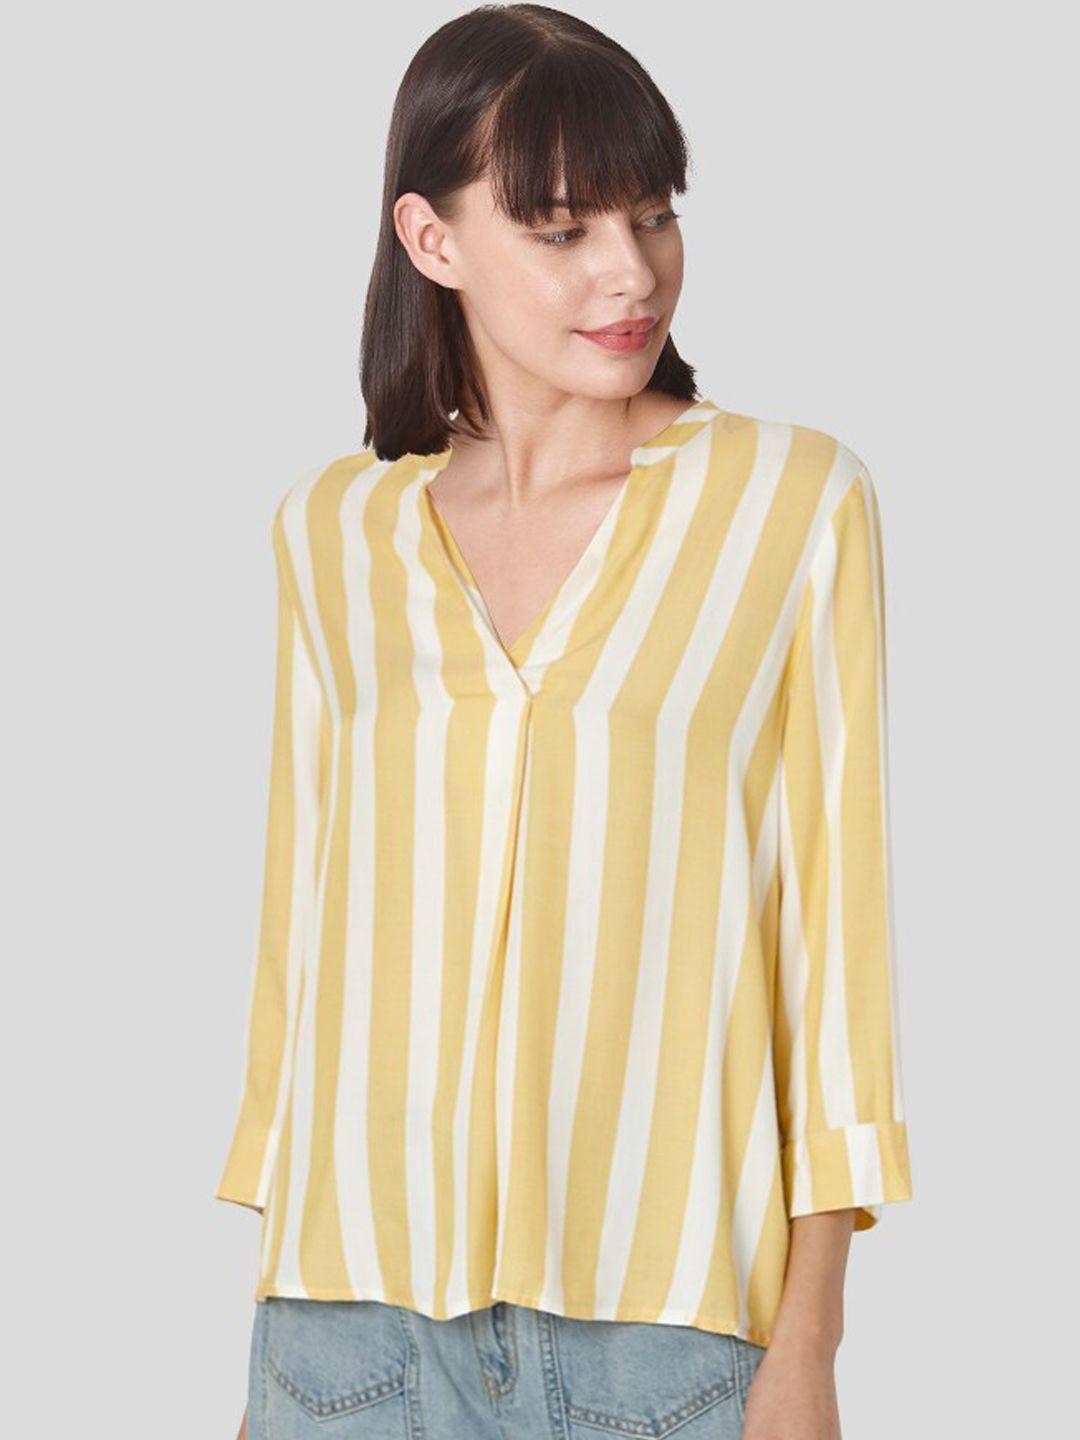 vero moda yellow striped mandarin collar shirt style top